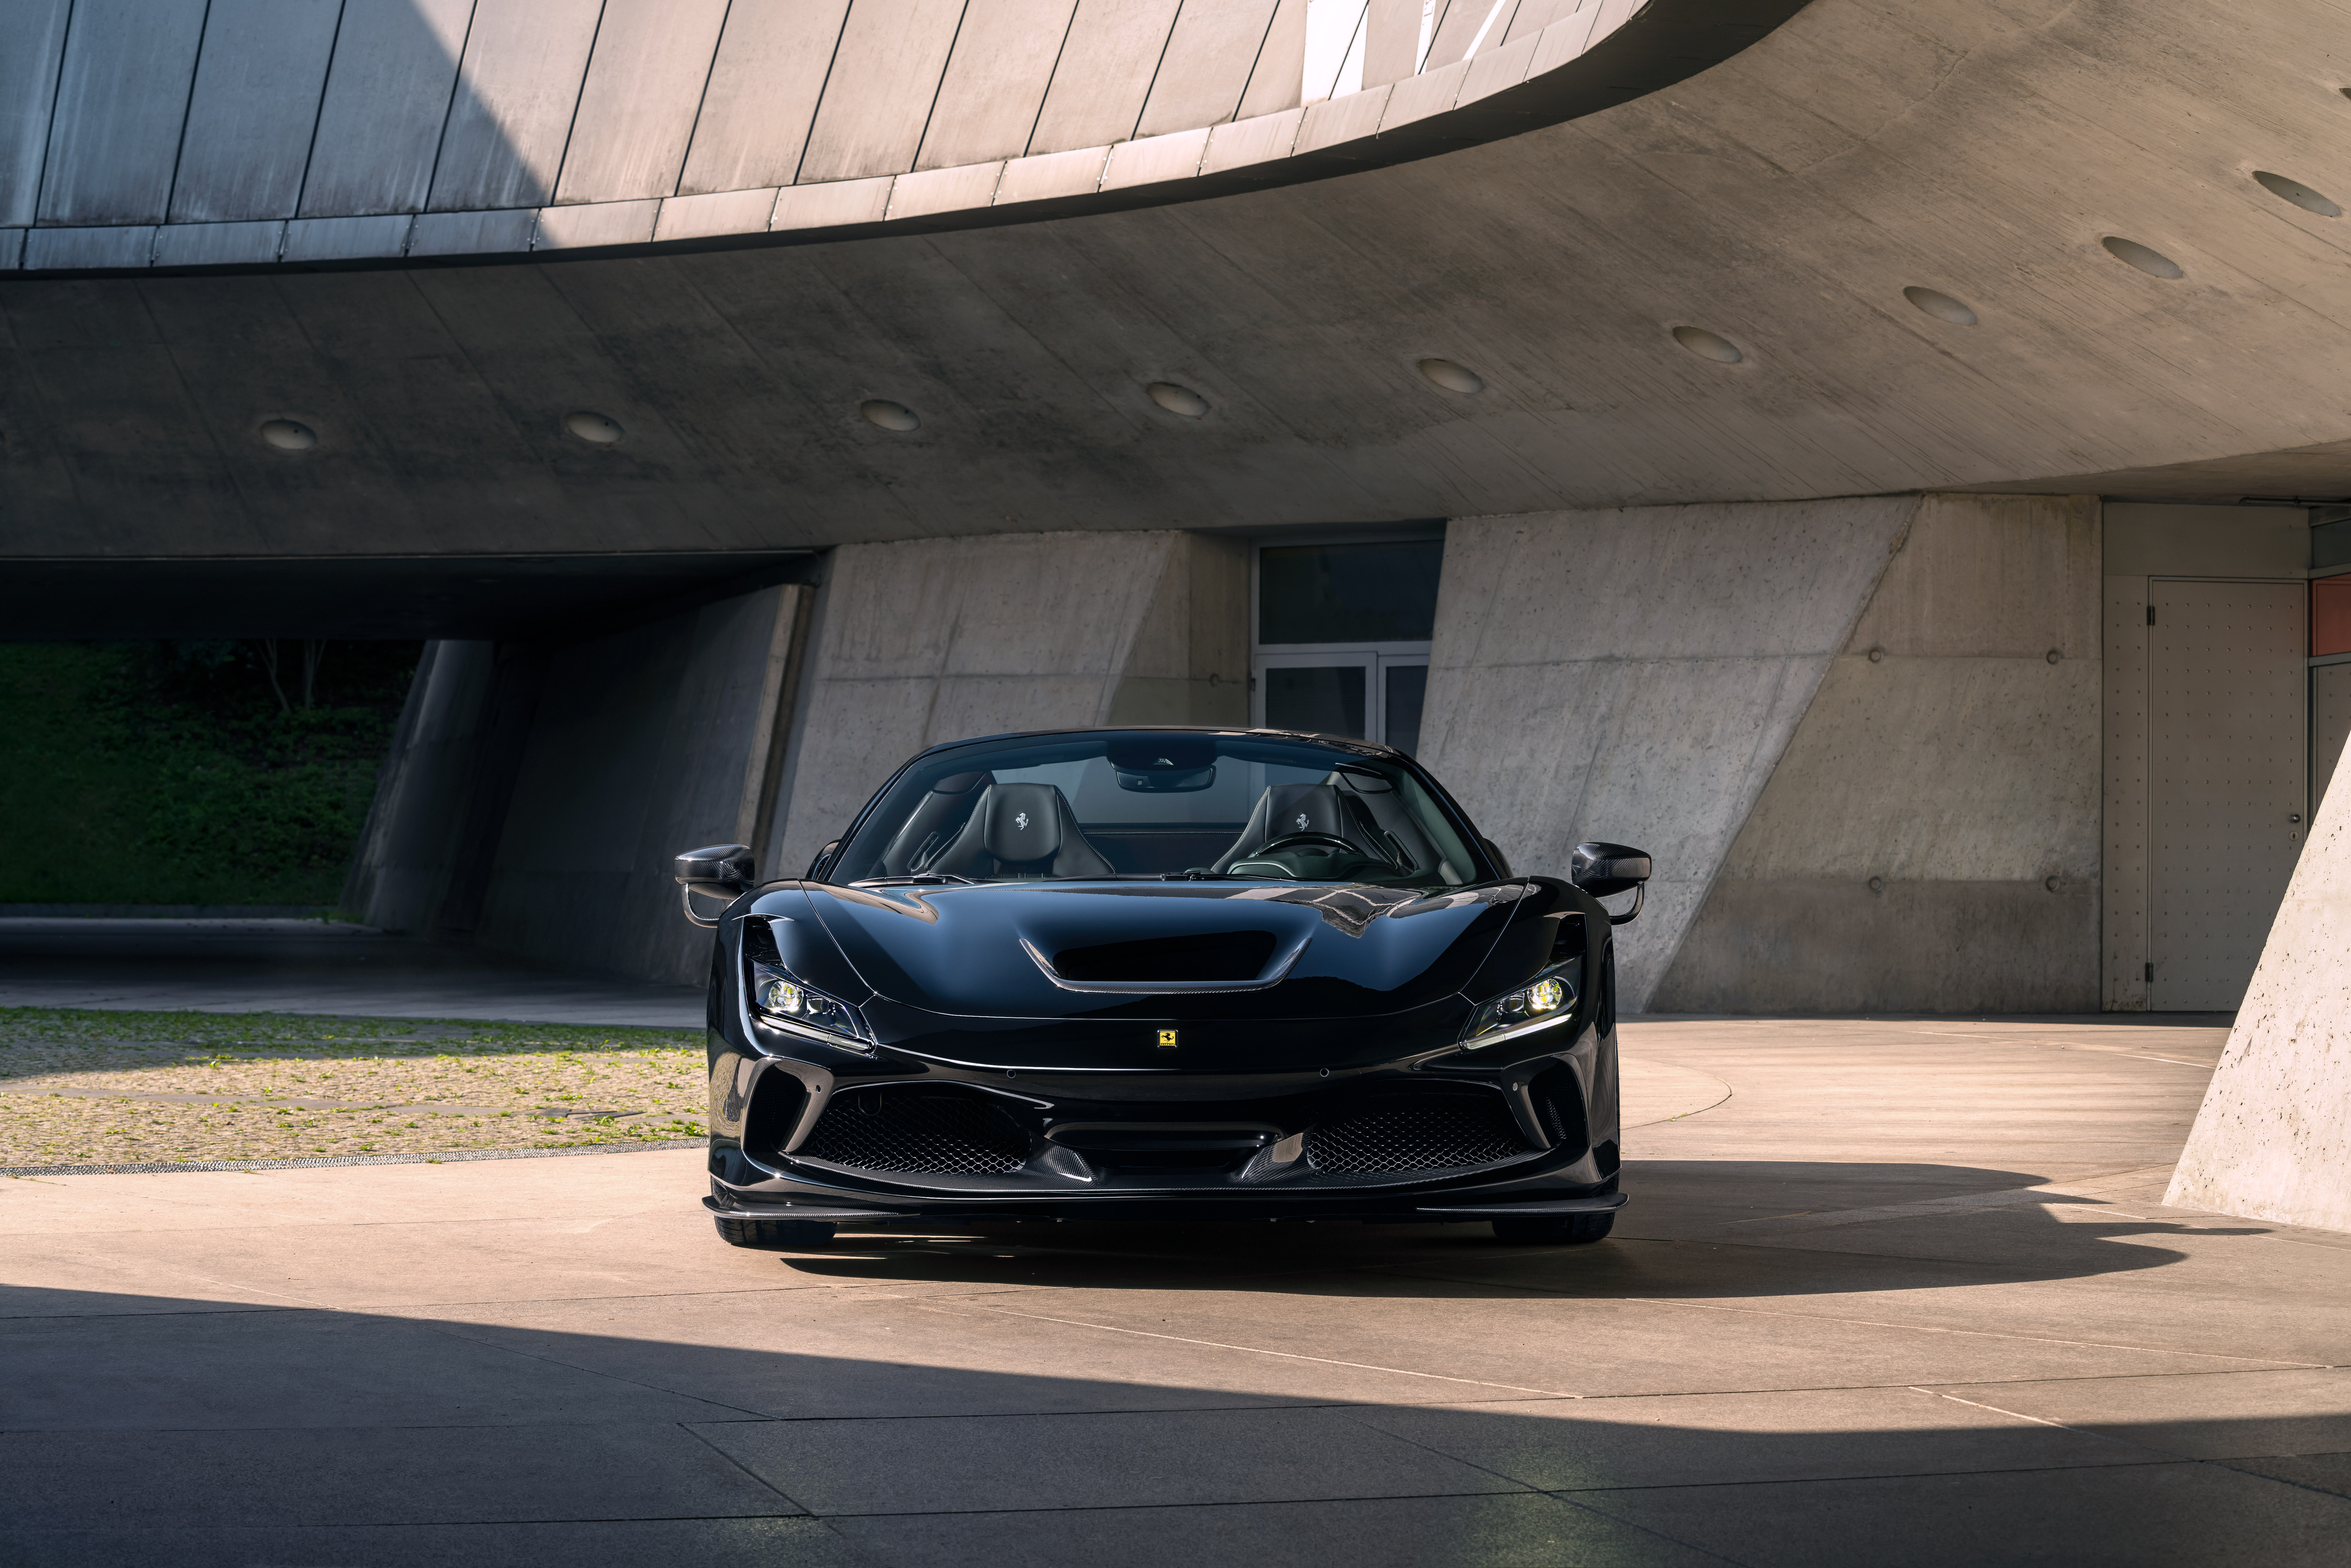 Ferrari black car, ferrari f8 spider, supercar, vehicles Free Stock Photos